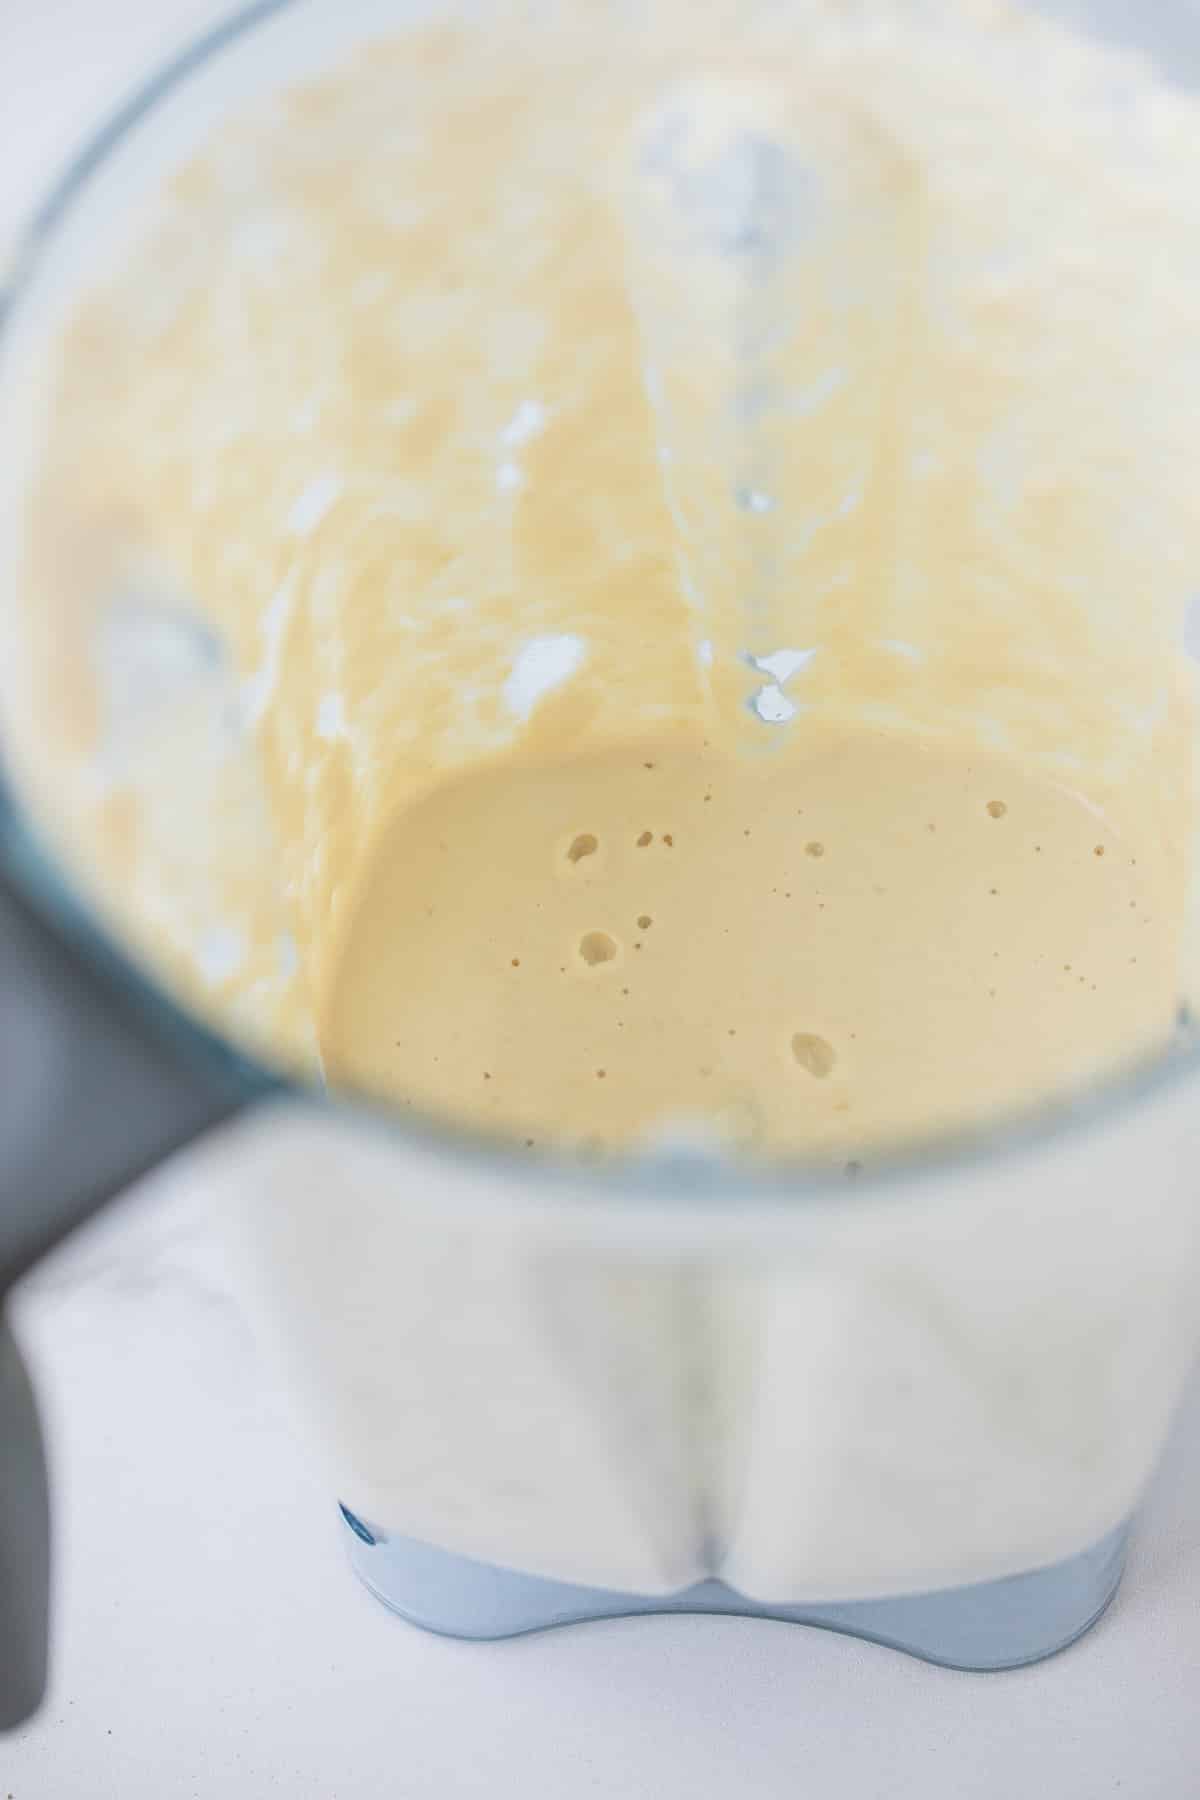 cream sauce in a blender